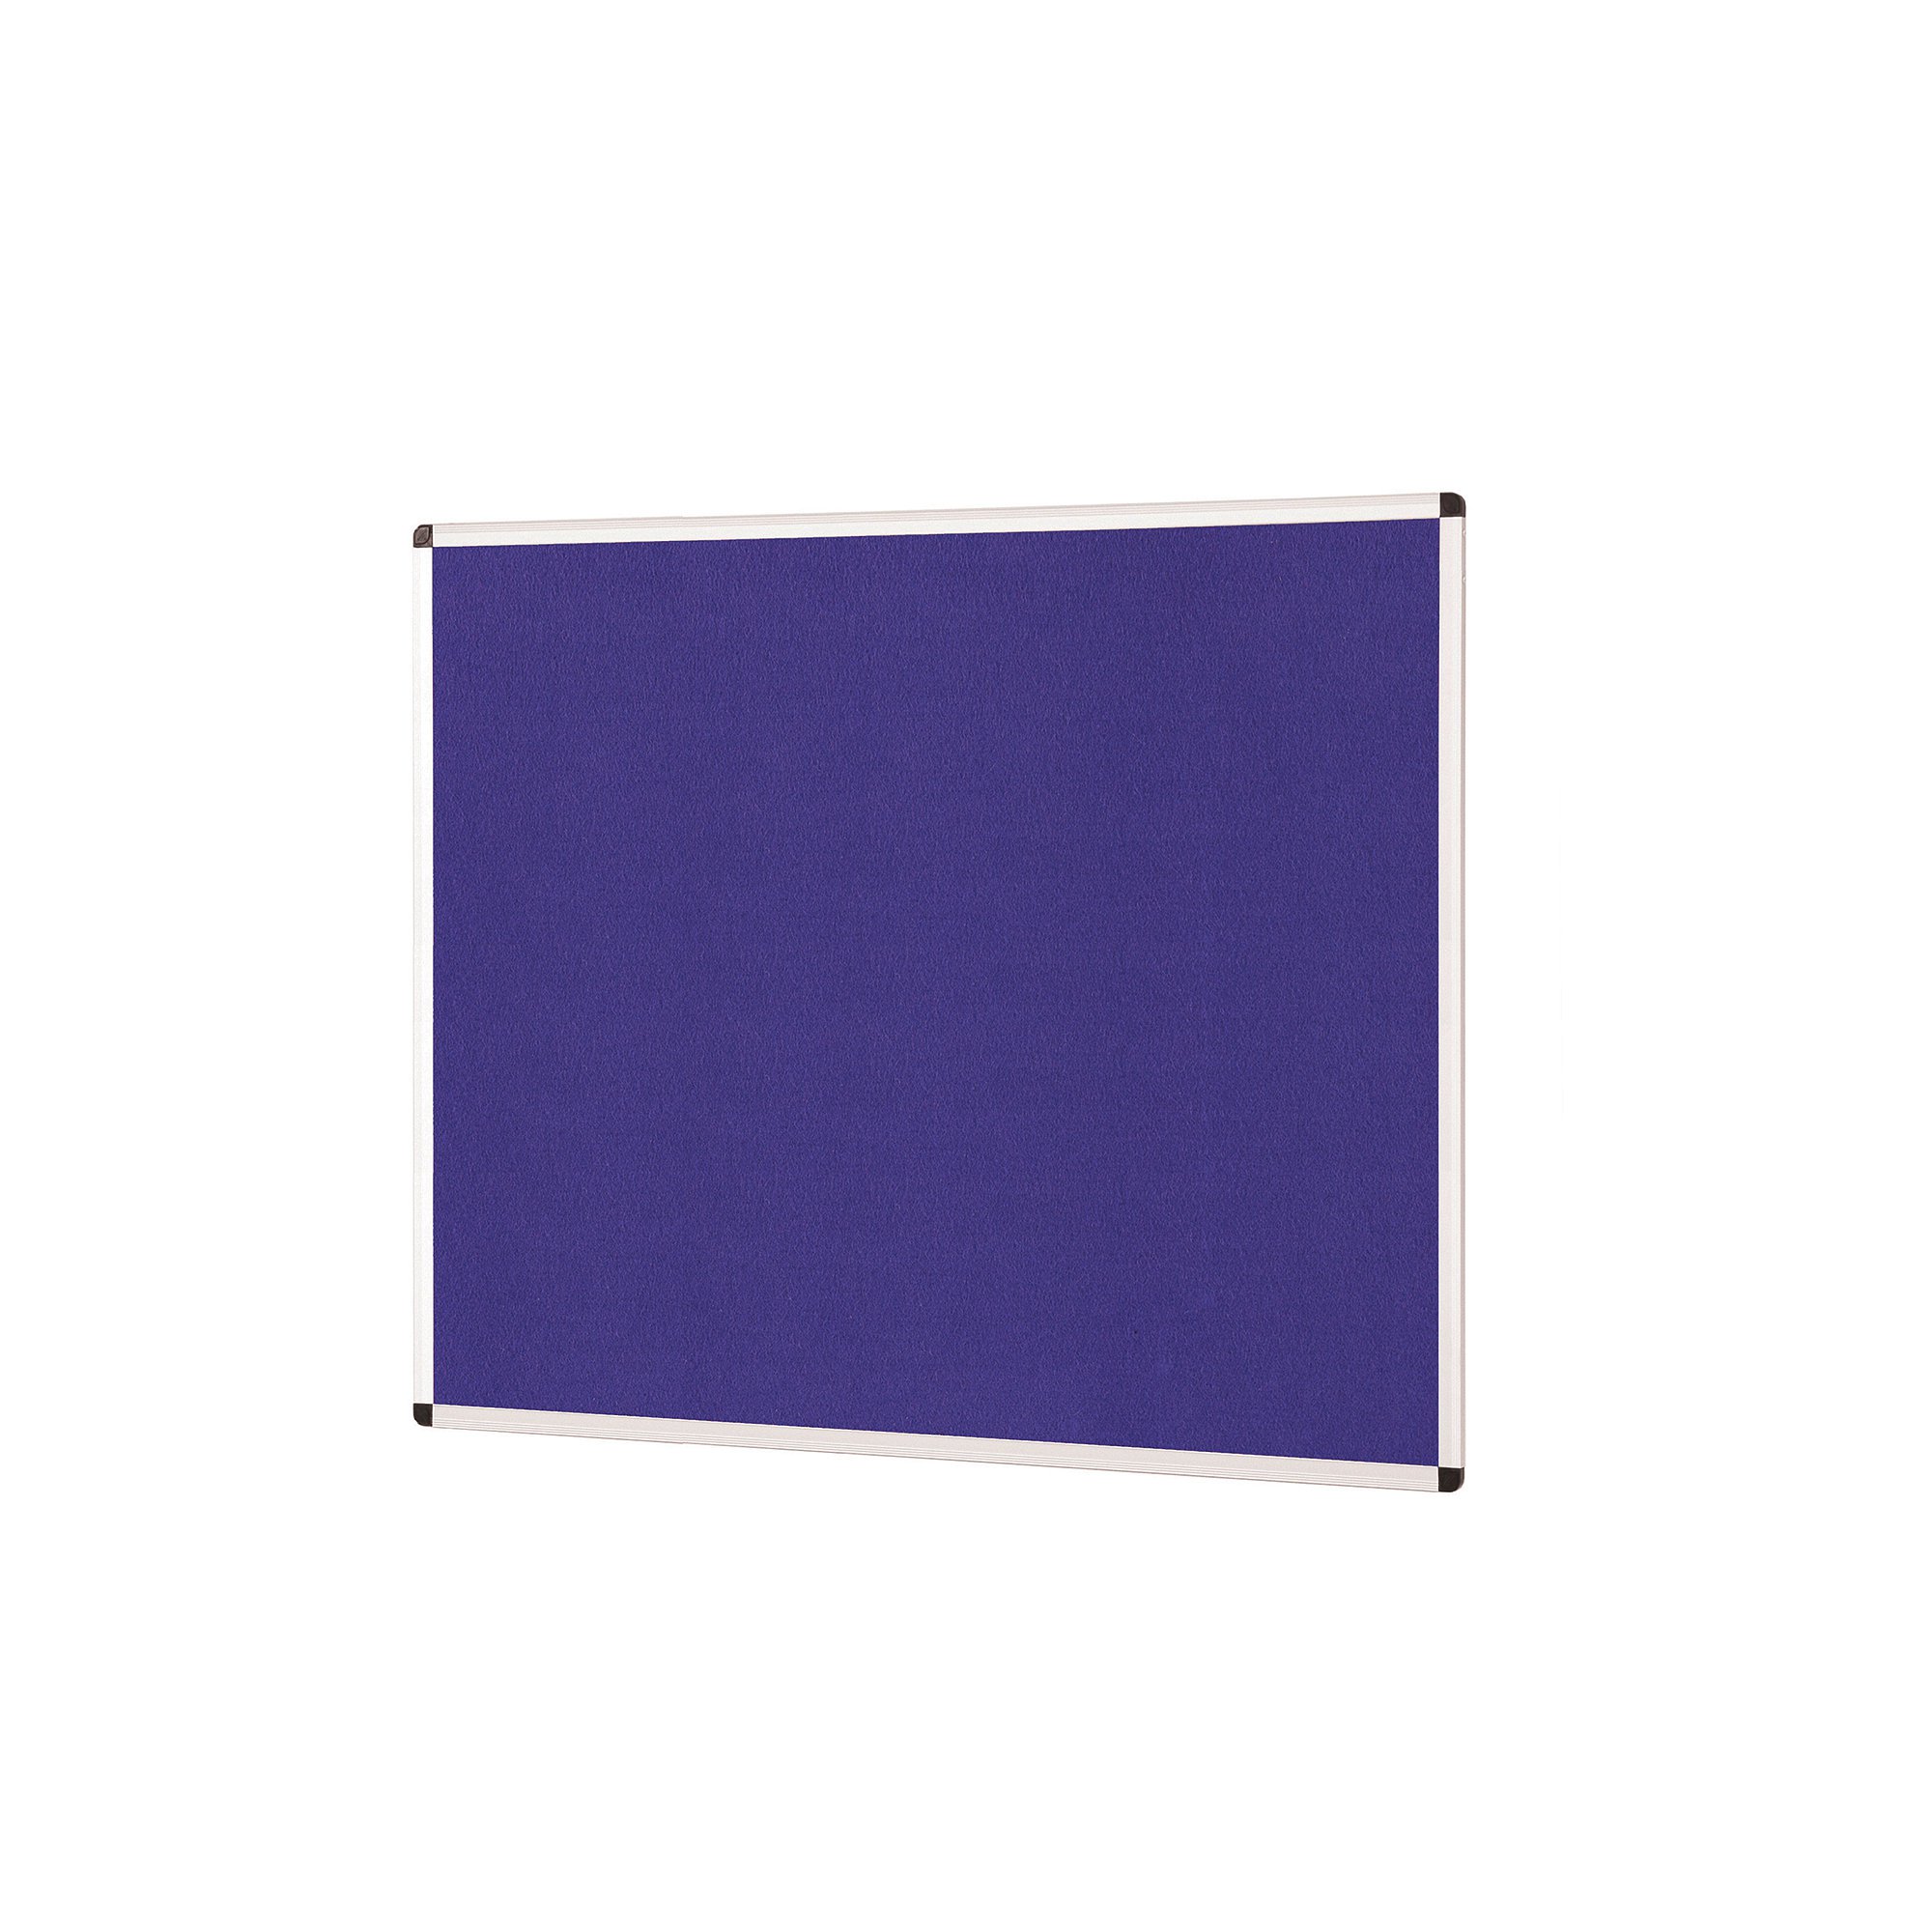 Colourful aluminium framed noticeboard, 1500x1200 mm, purple